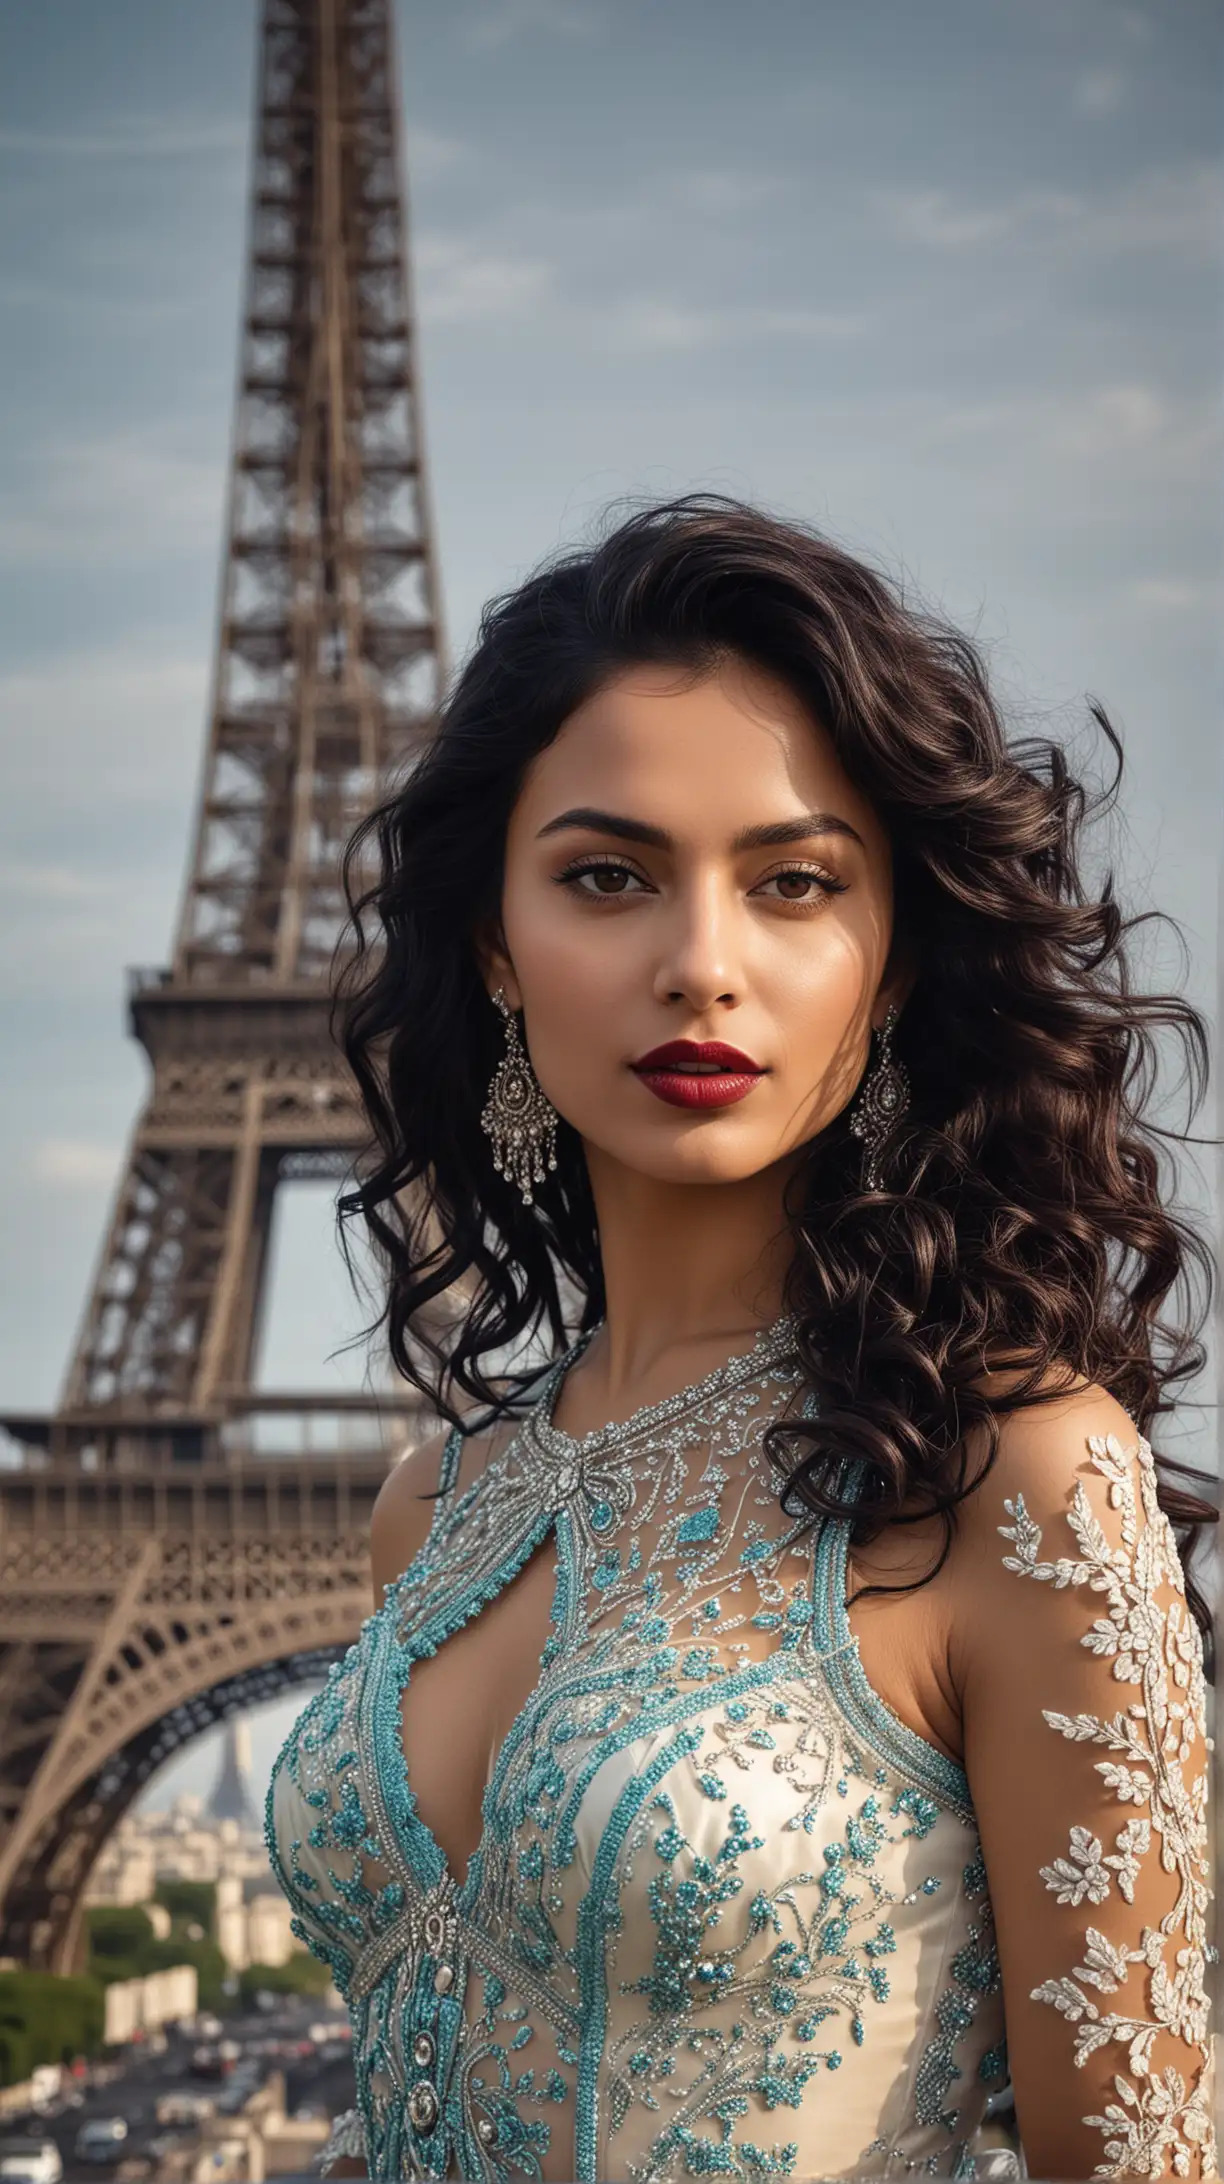 Elegant French Bride Posing at Eiffel Tower in Exquisite Indian Wedding Attire